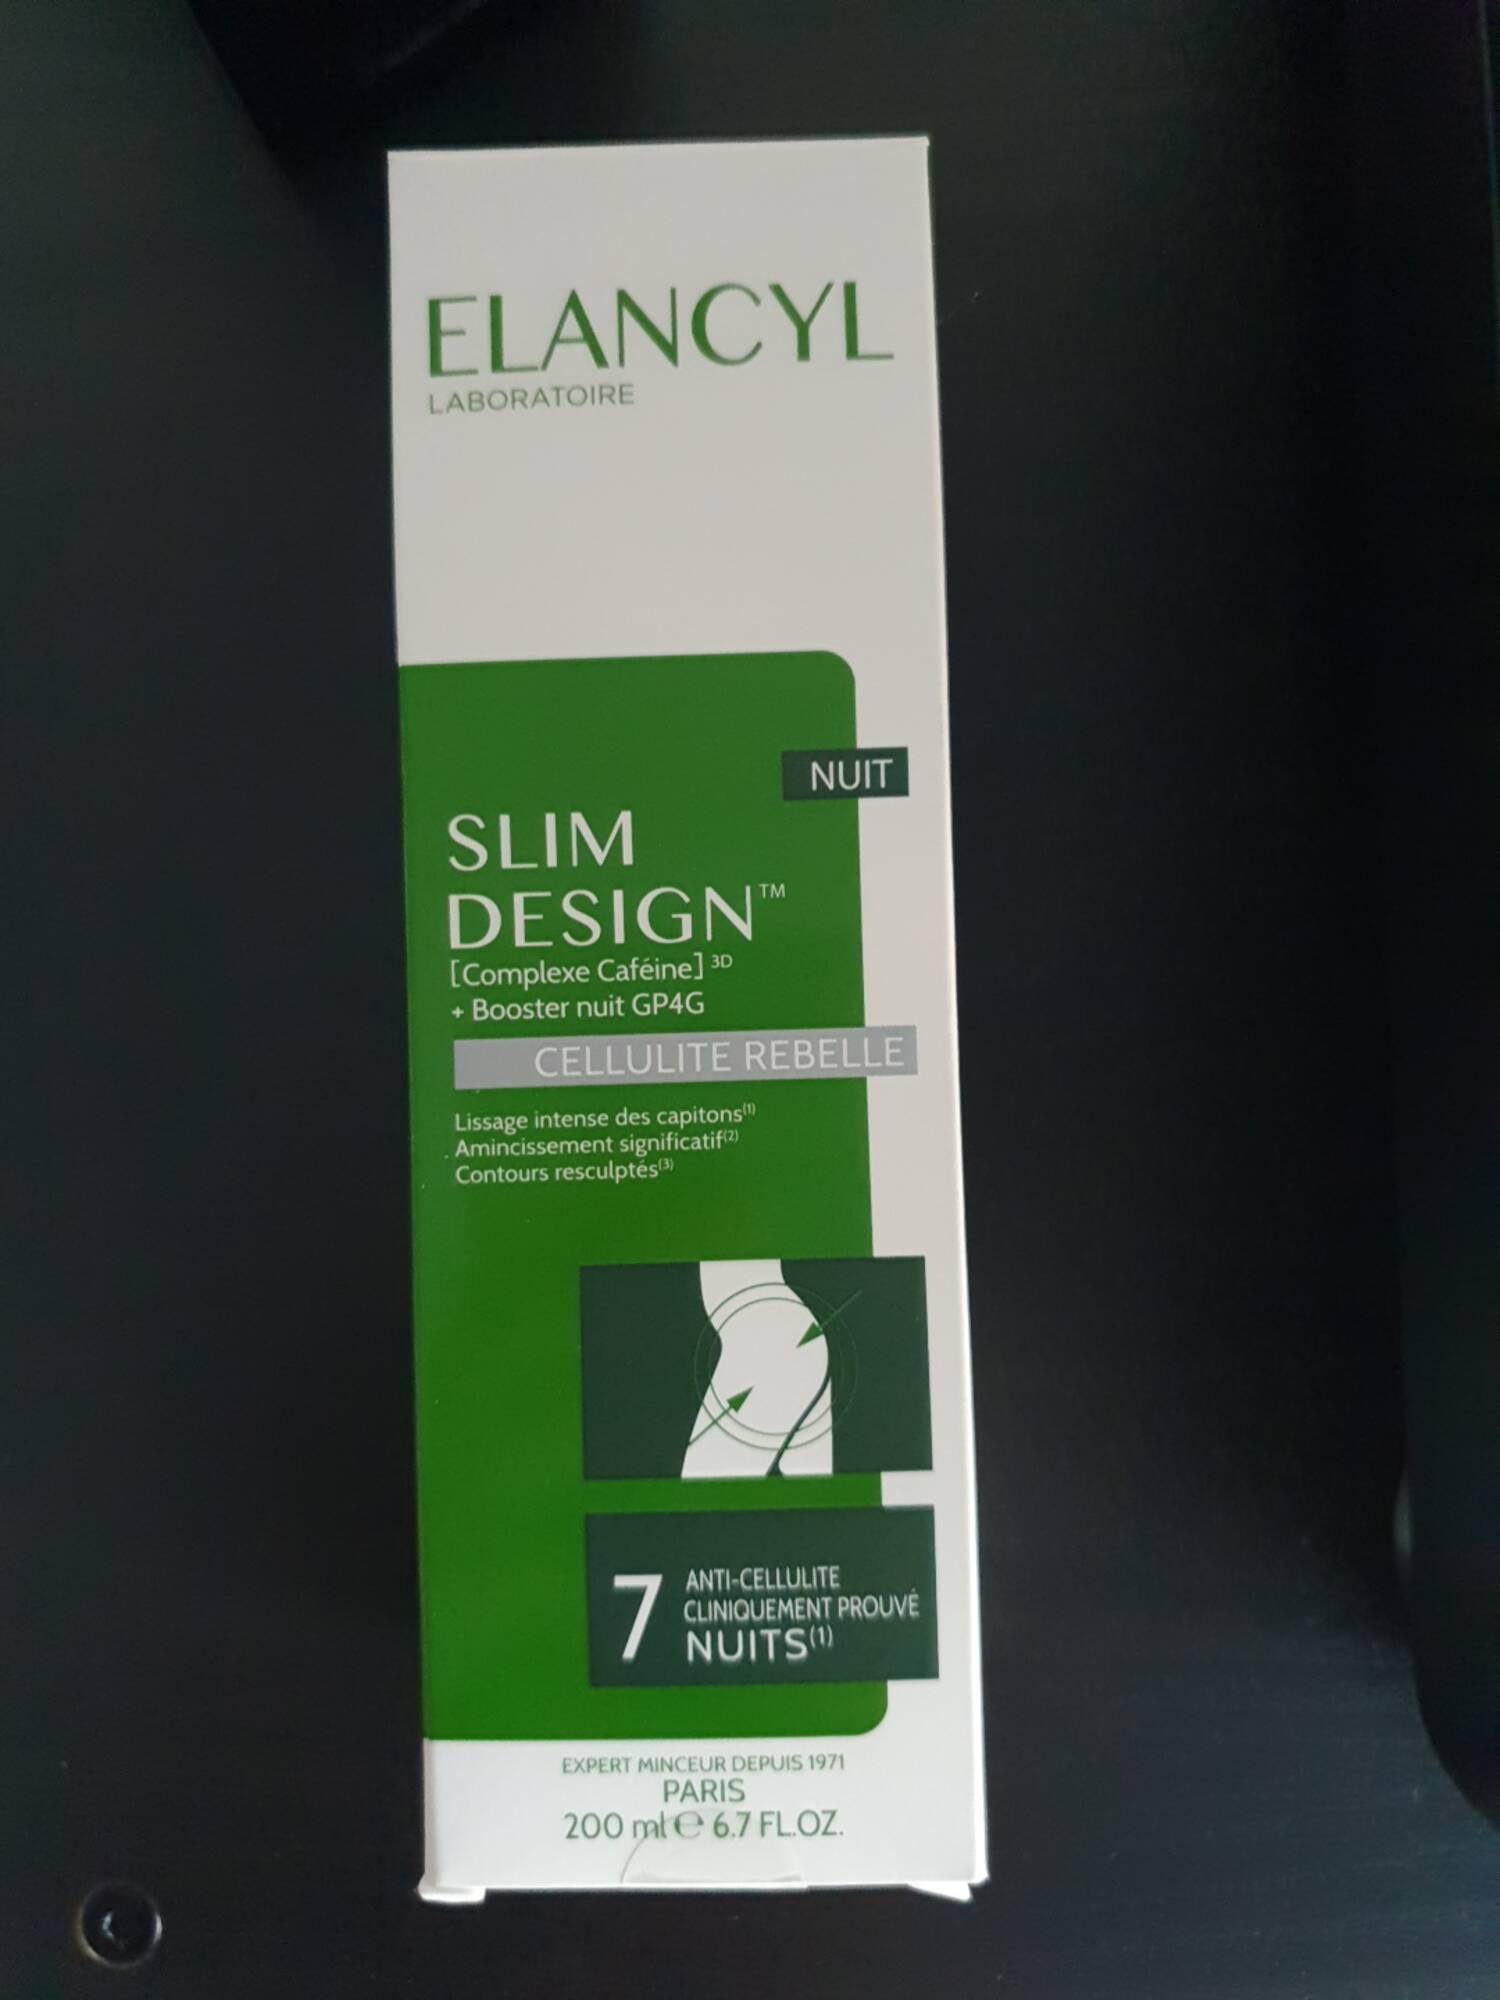 ELANCYL - Slim Design Nuit - Cellulite rebelle